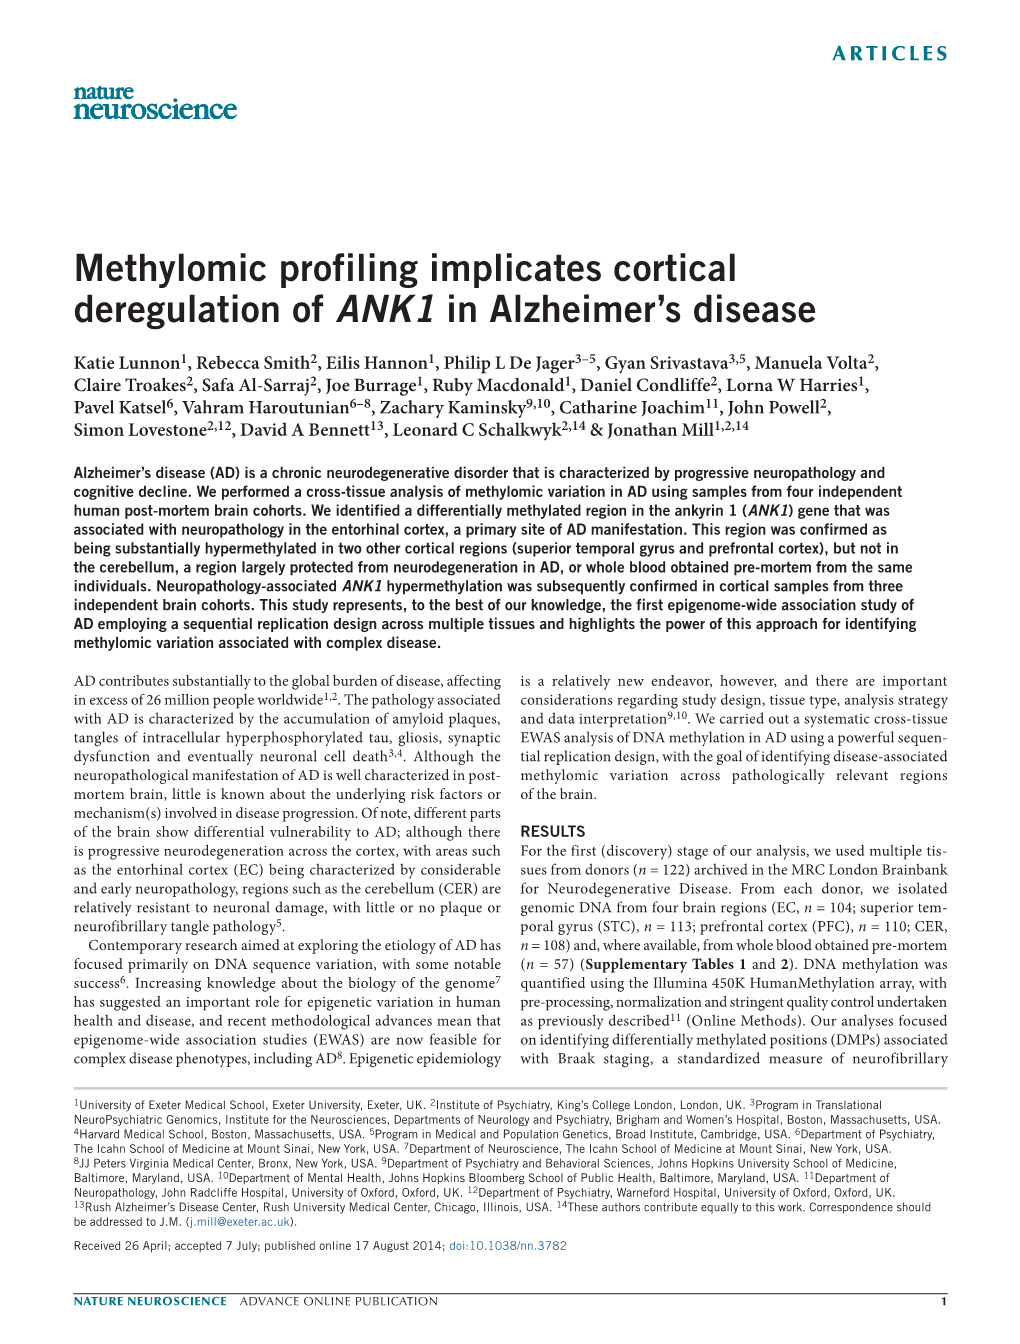 Methylomic Profiling Implicates Cortical Deregulation of ANK1 in Alzheimer’S Disease